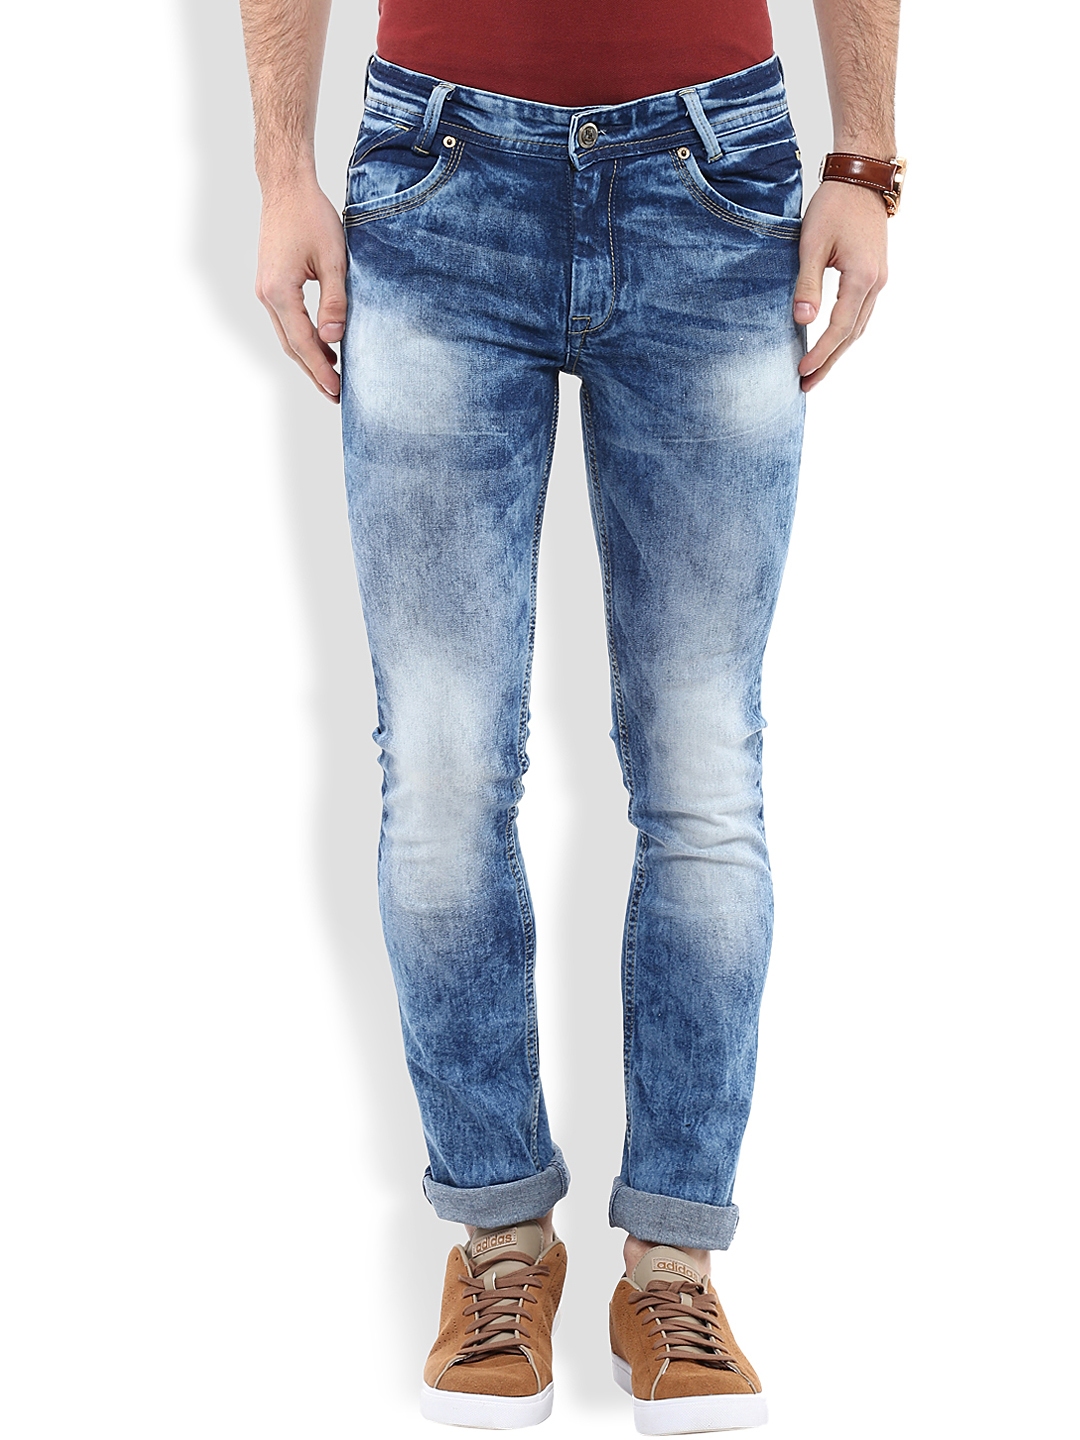 Buy Mufti Blue Skinny Jeans - Jeans for Men 1445167 | Myntra